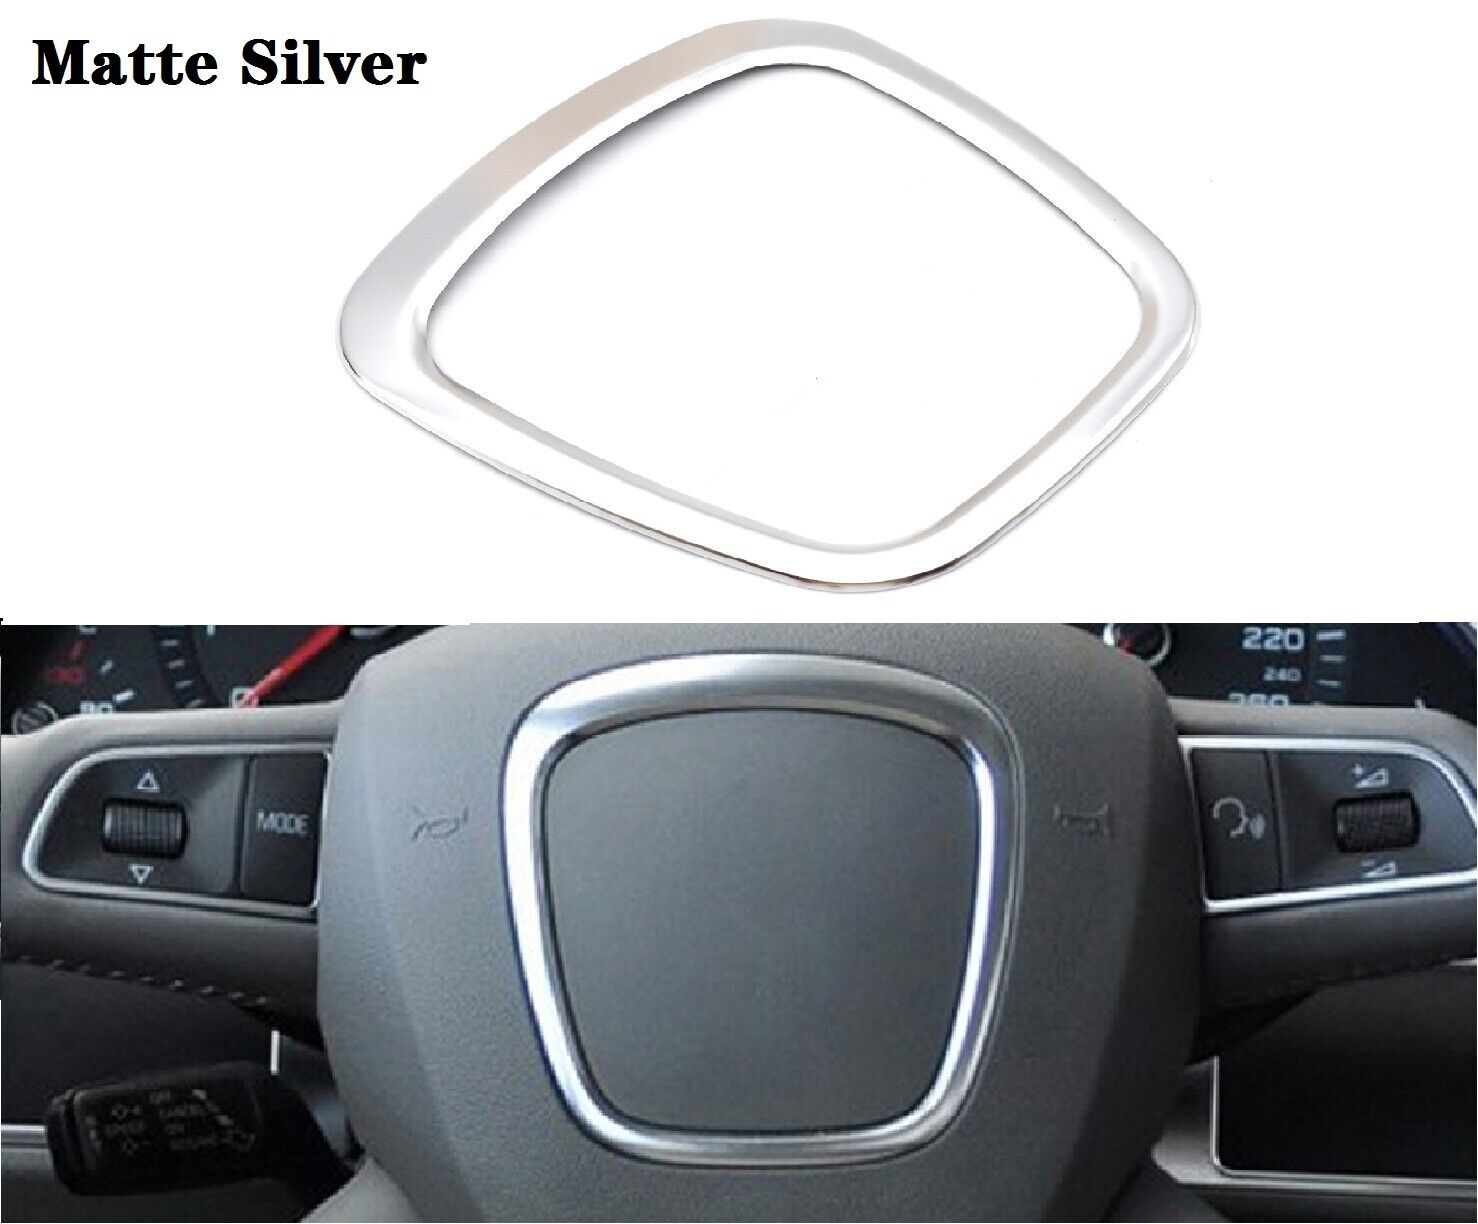 Chrome Car Steering Wheel Frame For Audi A3 A4 A6 A8 Q5 Trim Cover Sticker MATTE